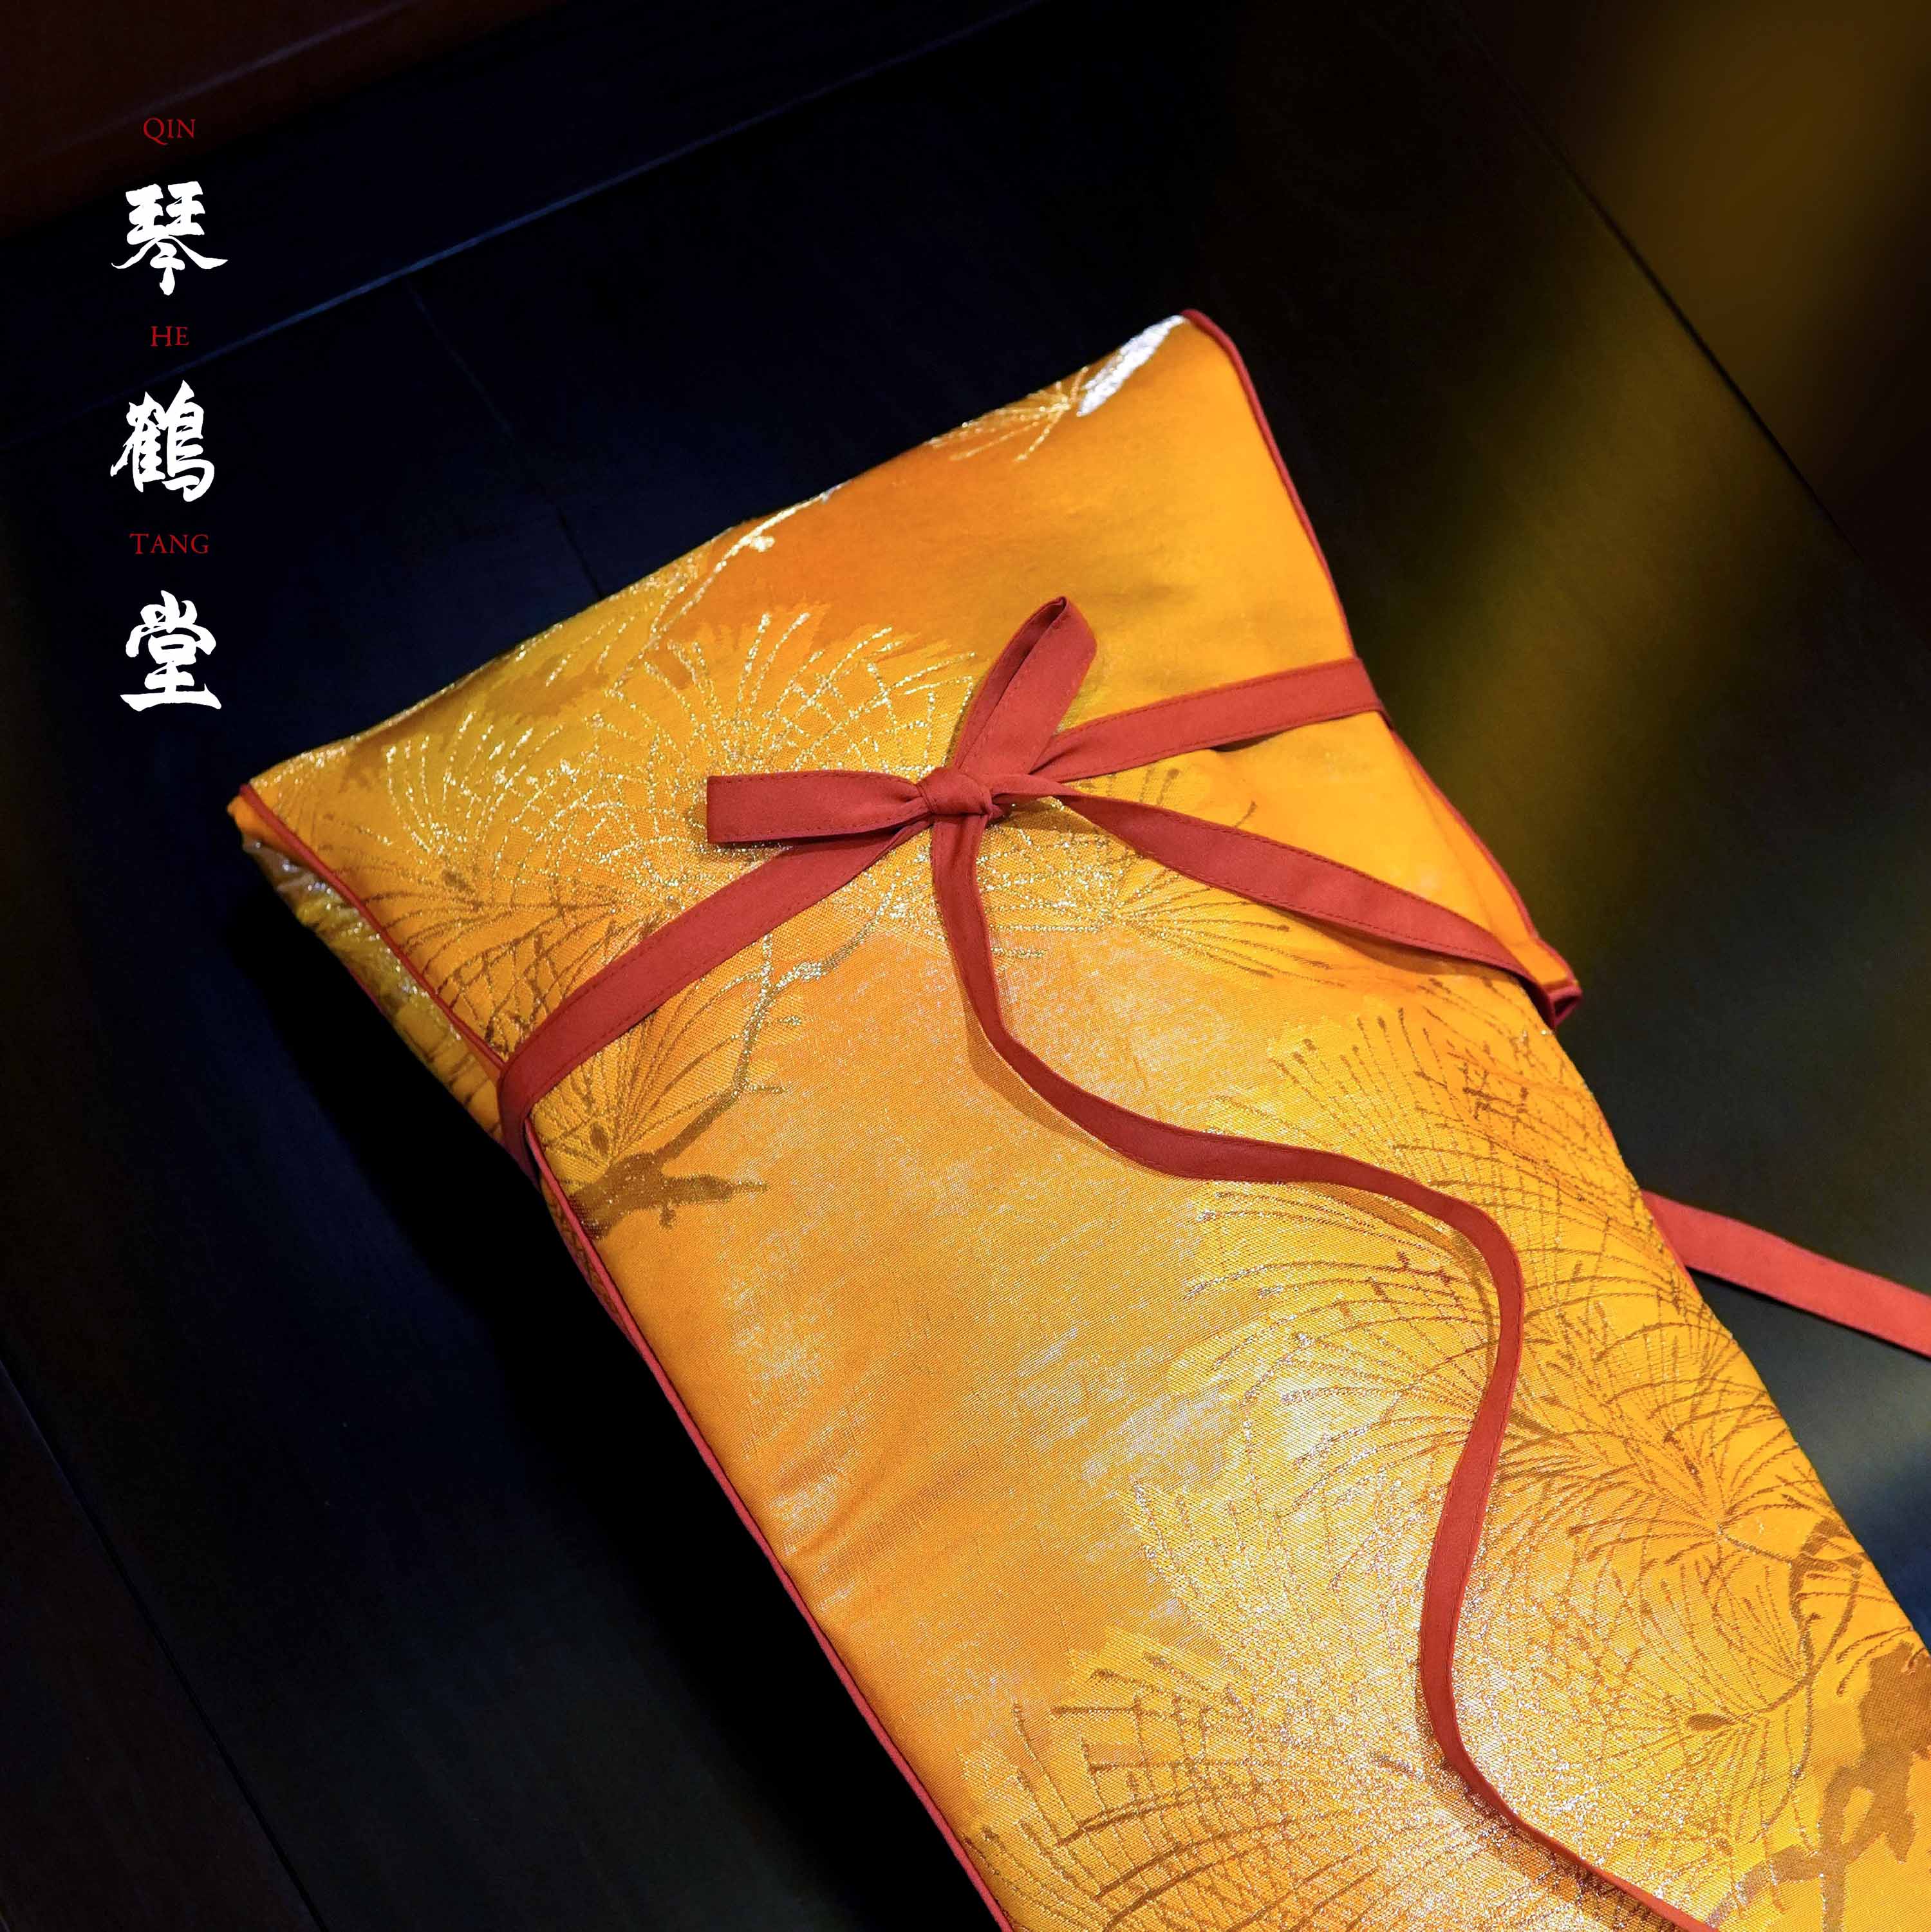 Silken Serenade: Exquisite Handcrafted Guqin Bag with Vintage Brocade Fabric